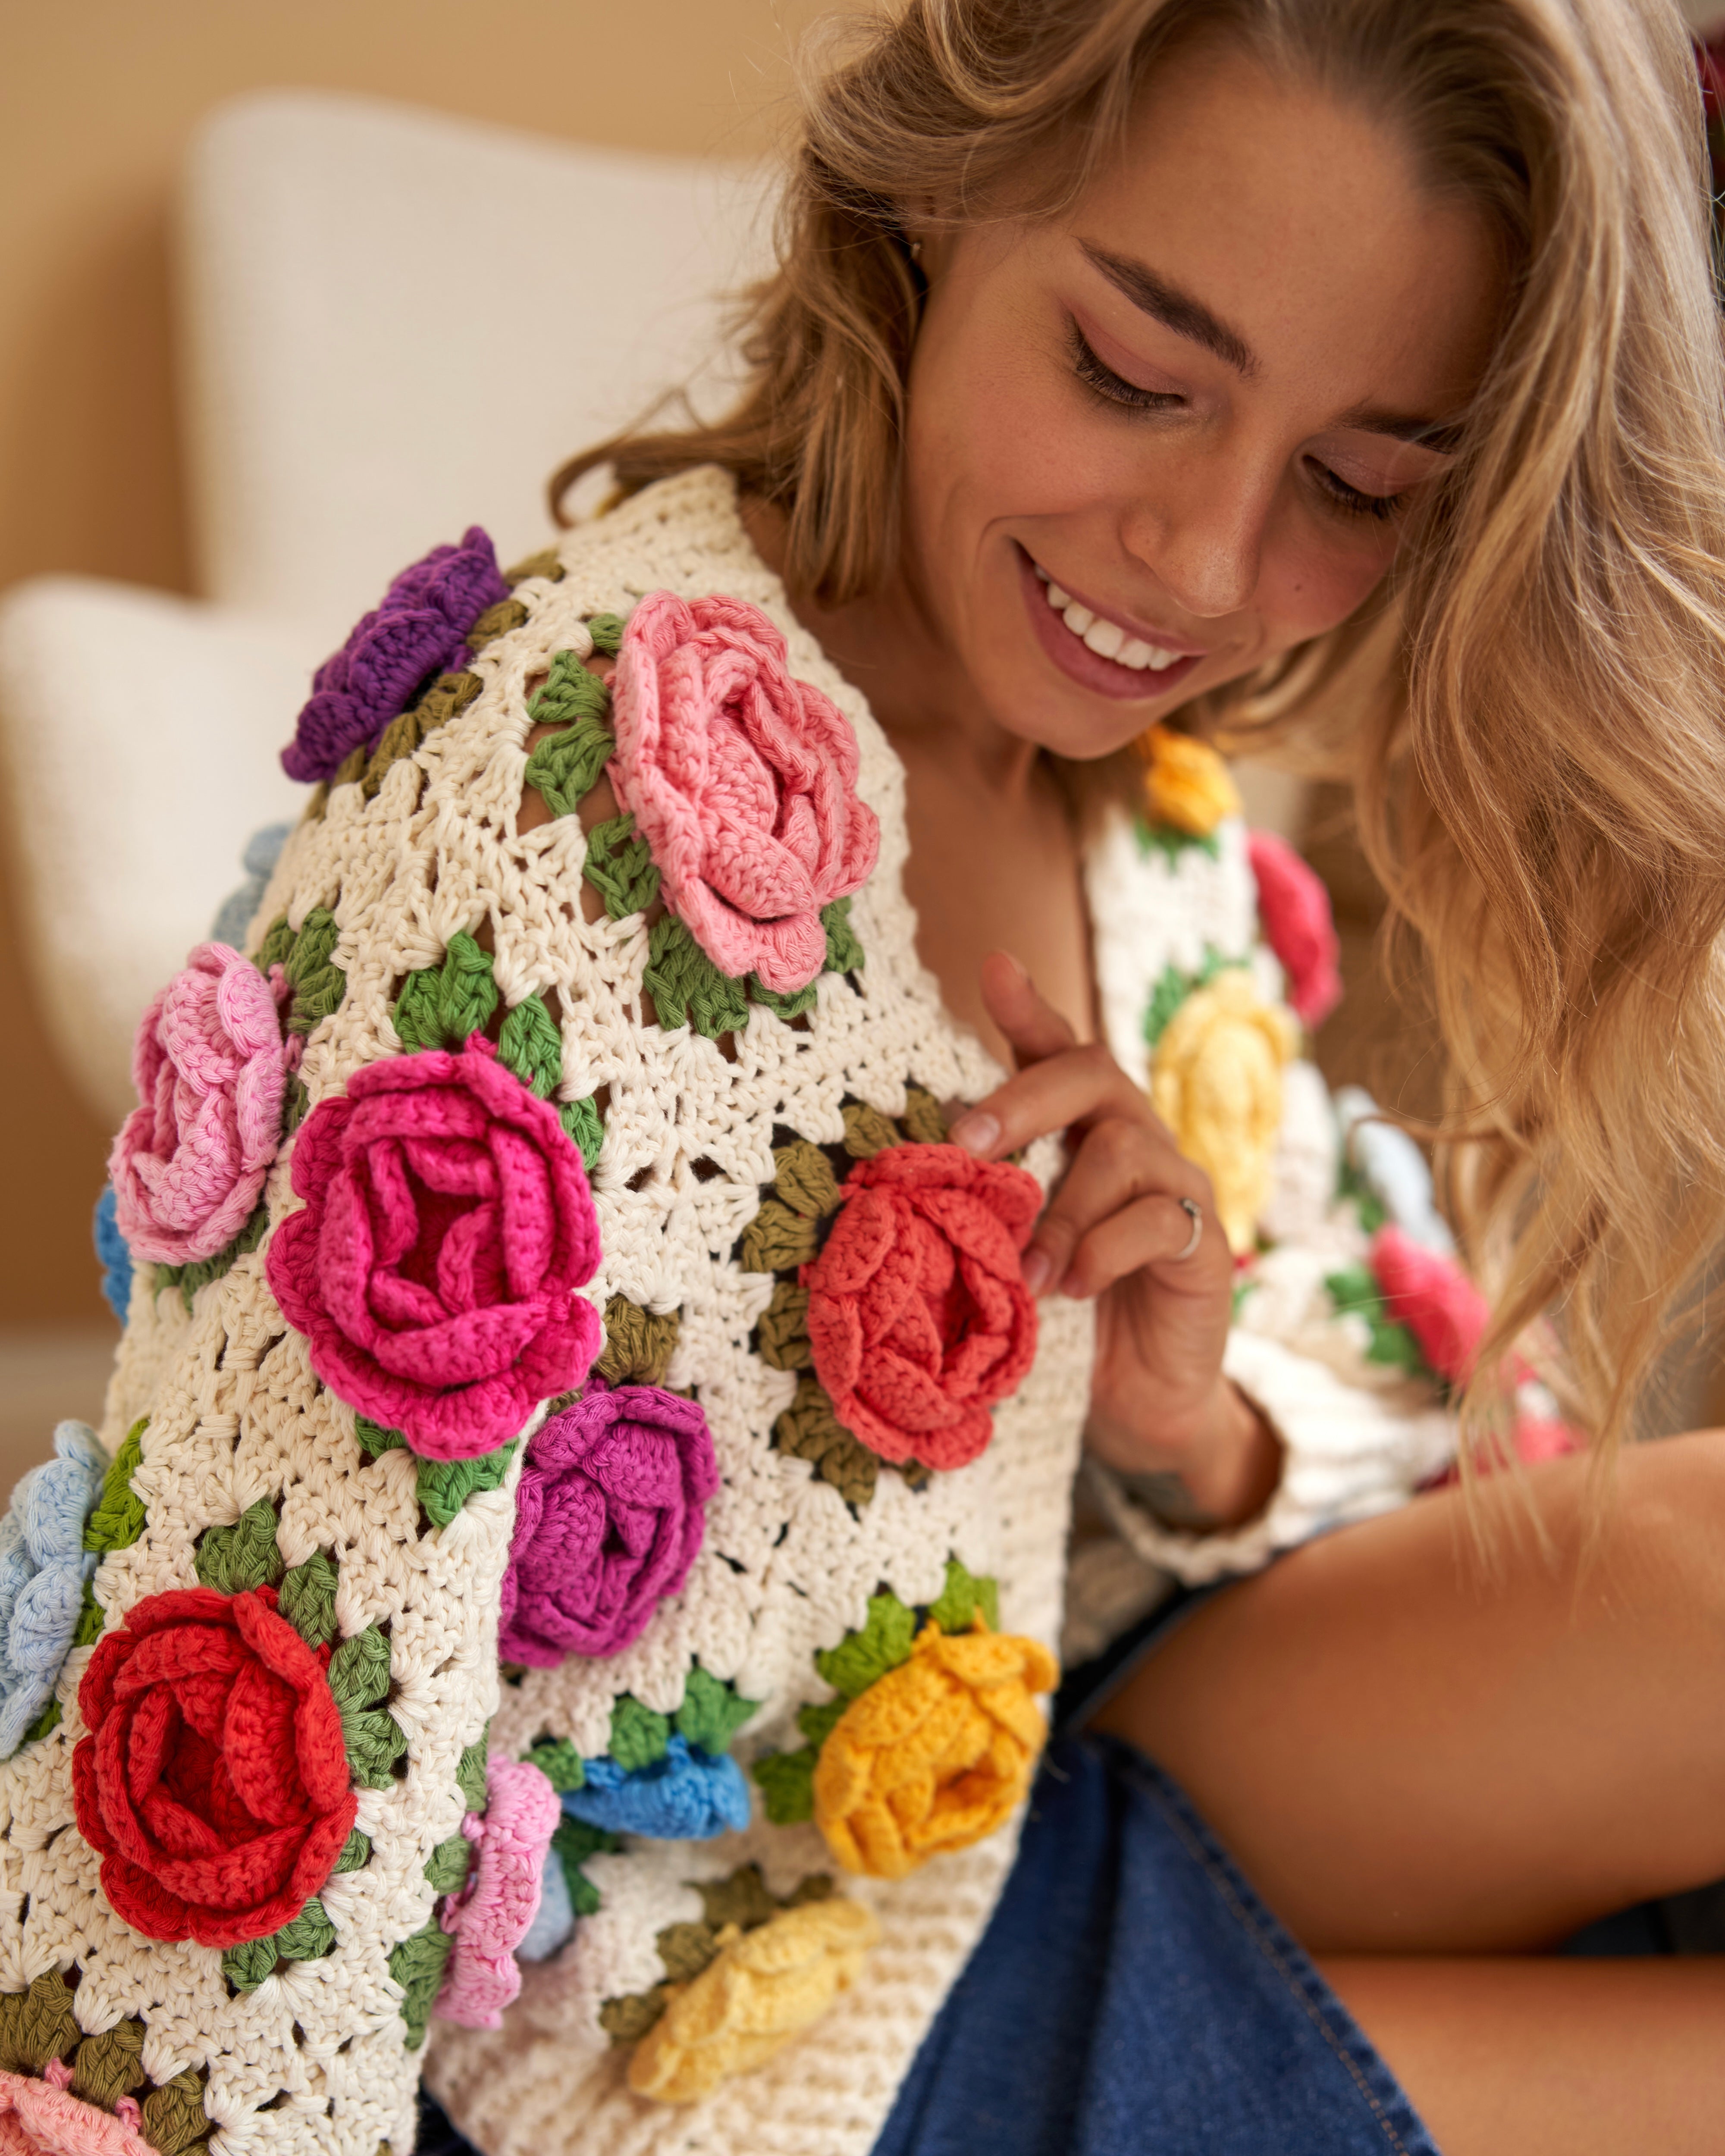 10 BESTSELLING crochet patterns from TScrochetdesign (instant download)